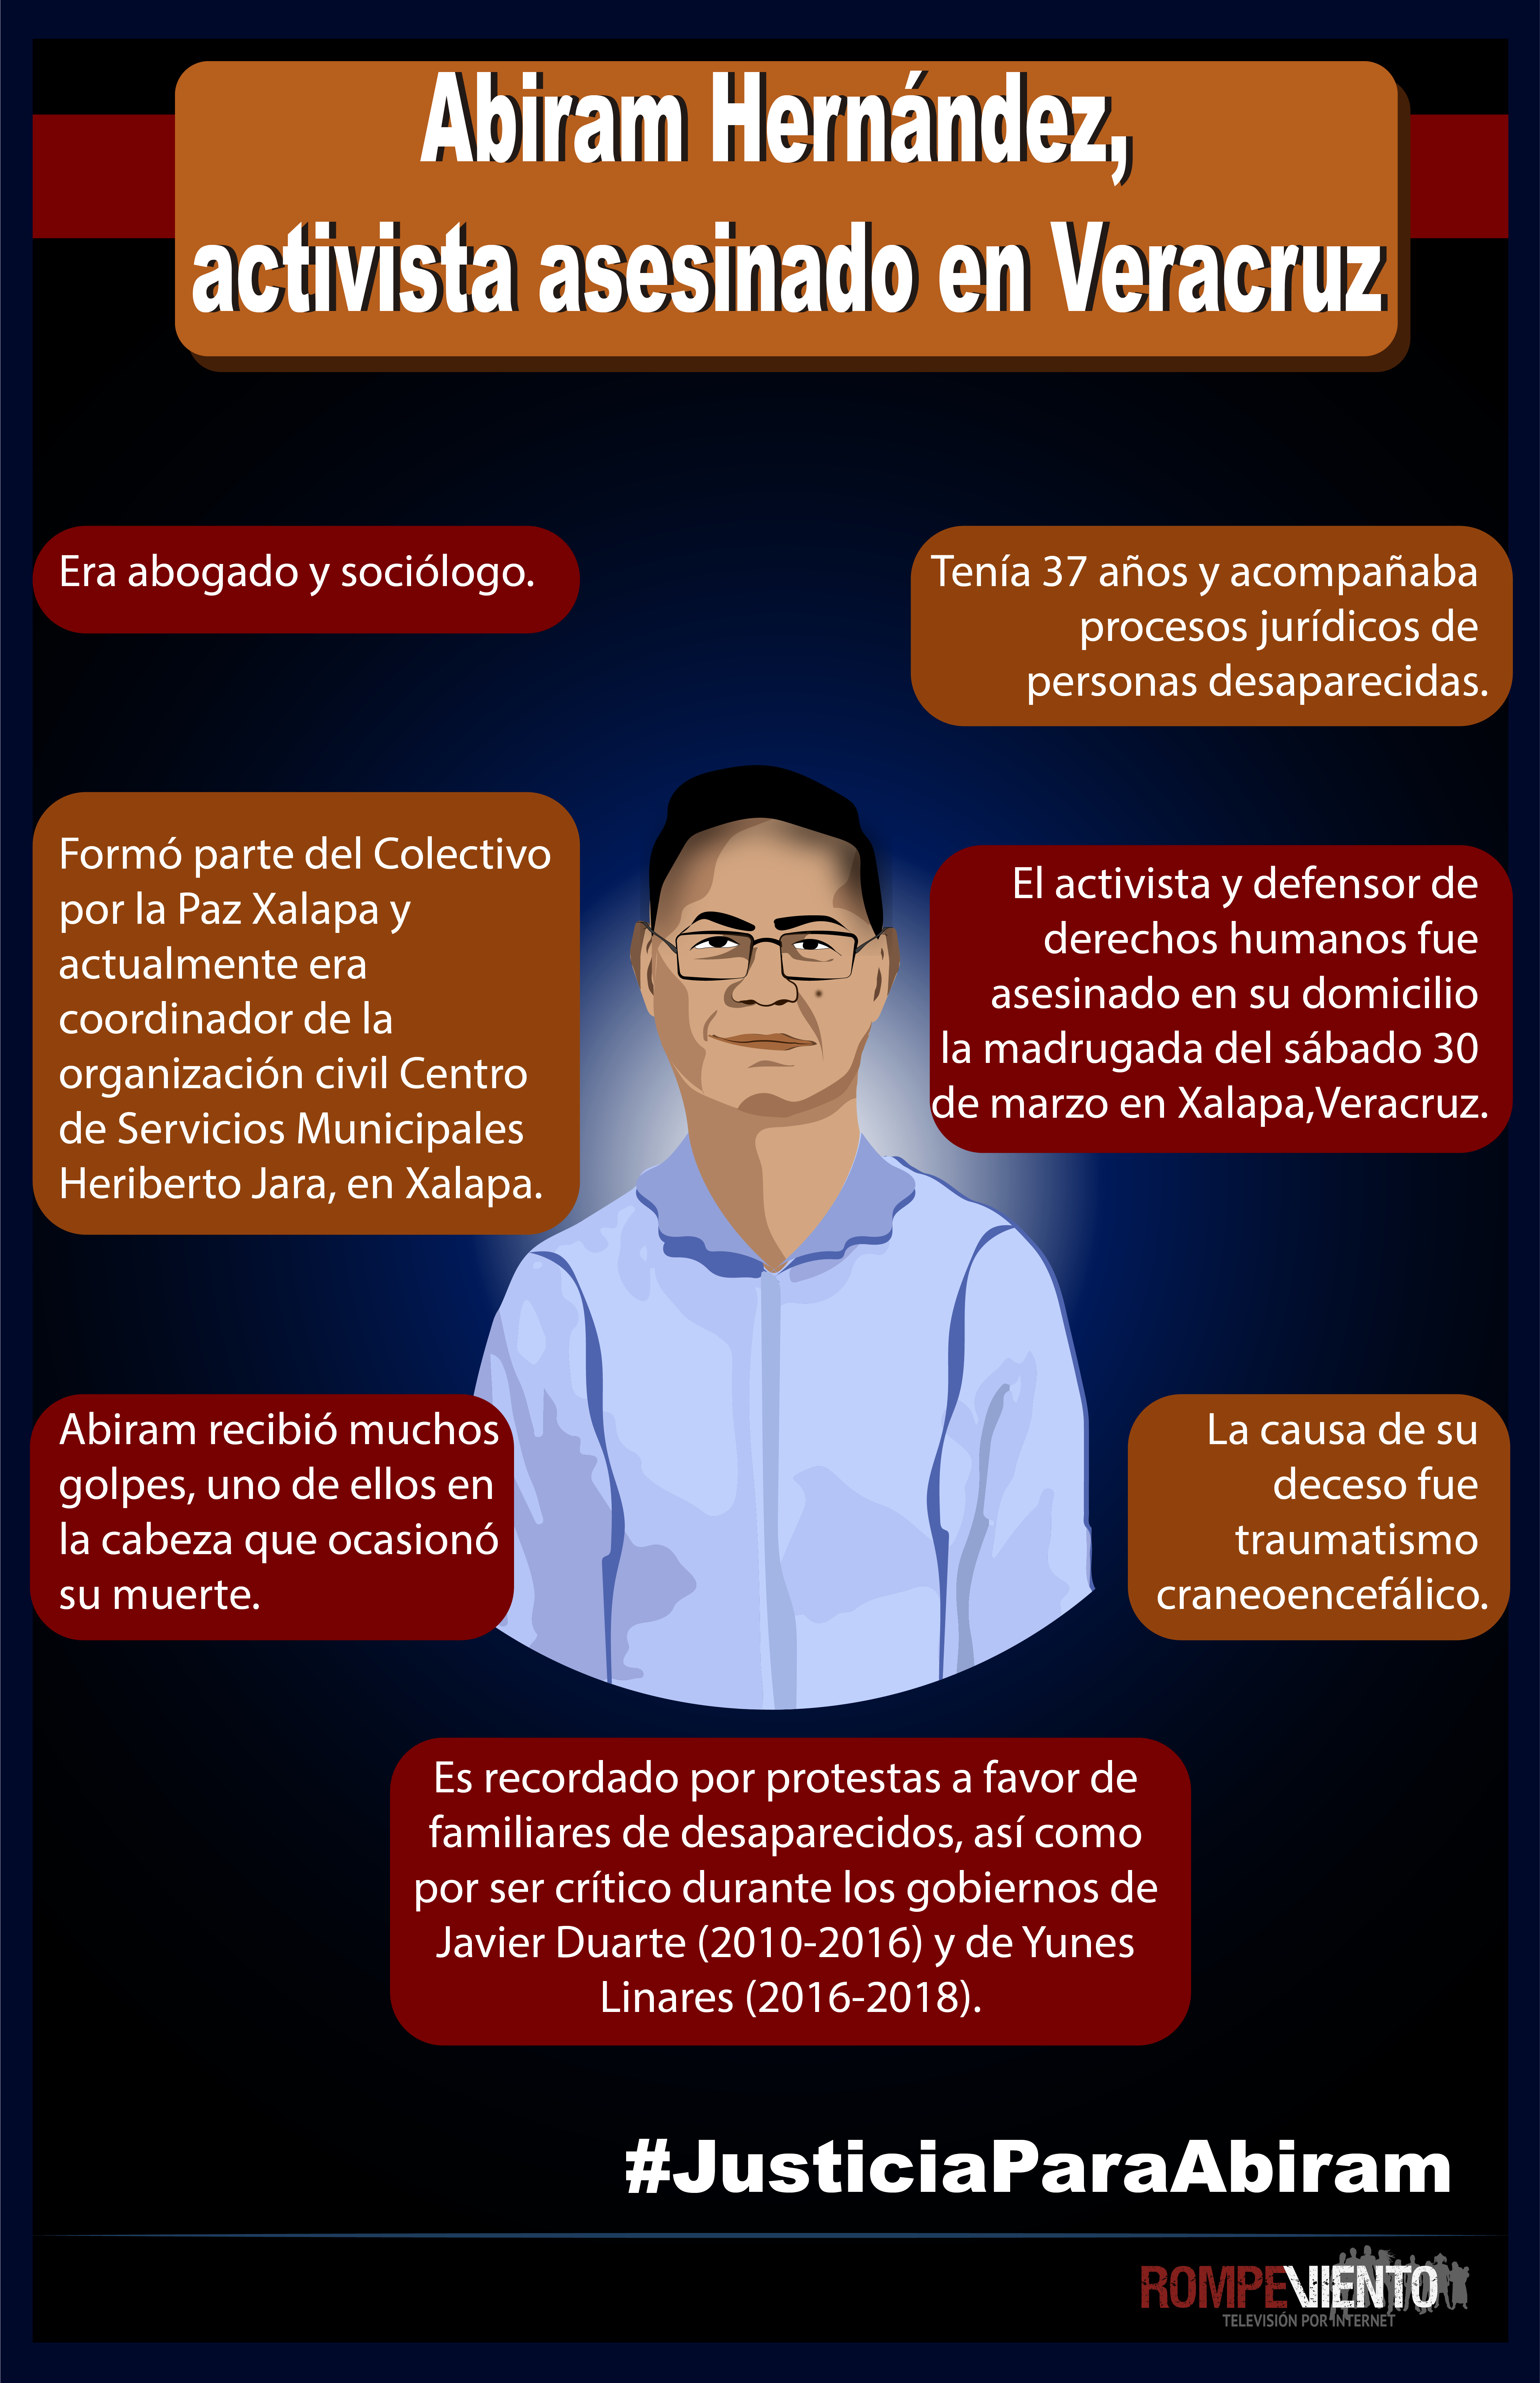 Abiram Hernández, activista asesinado en Veracruz